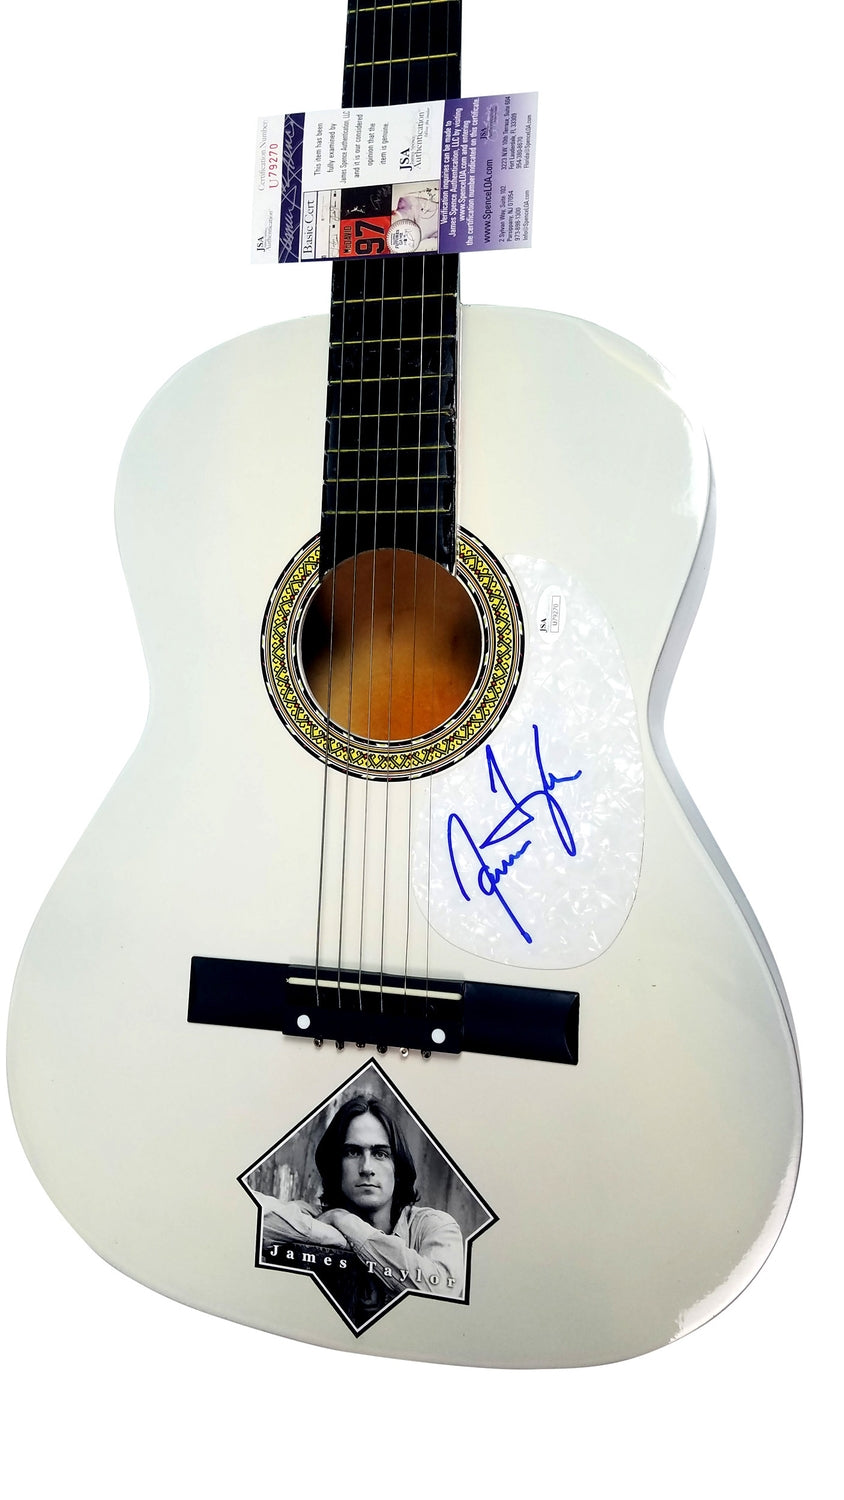 James Taylor Autographed Signed Acoustic Guitar